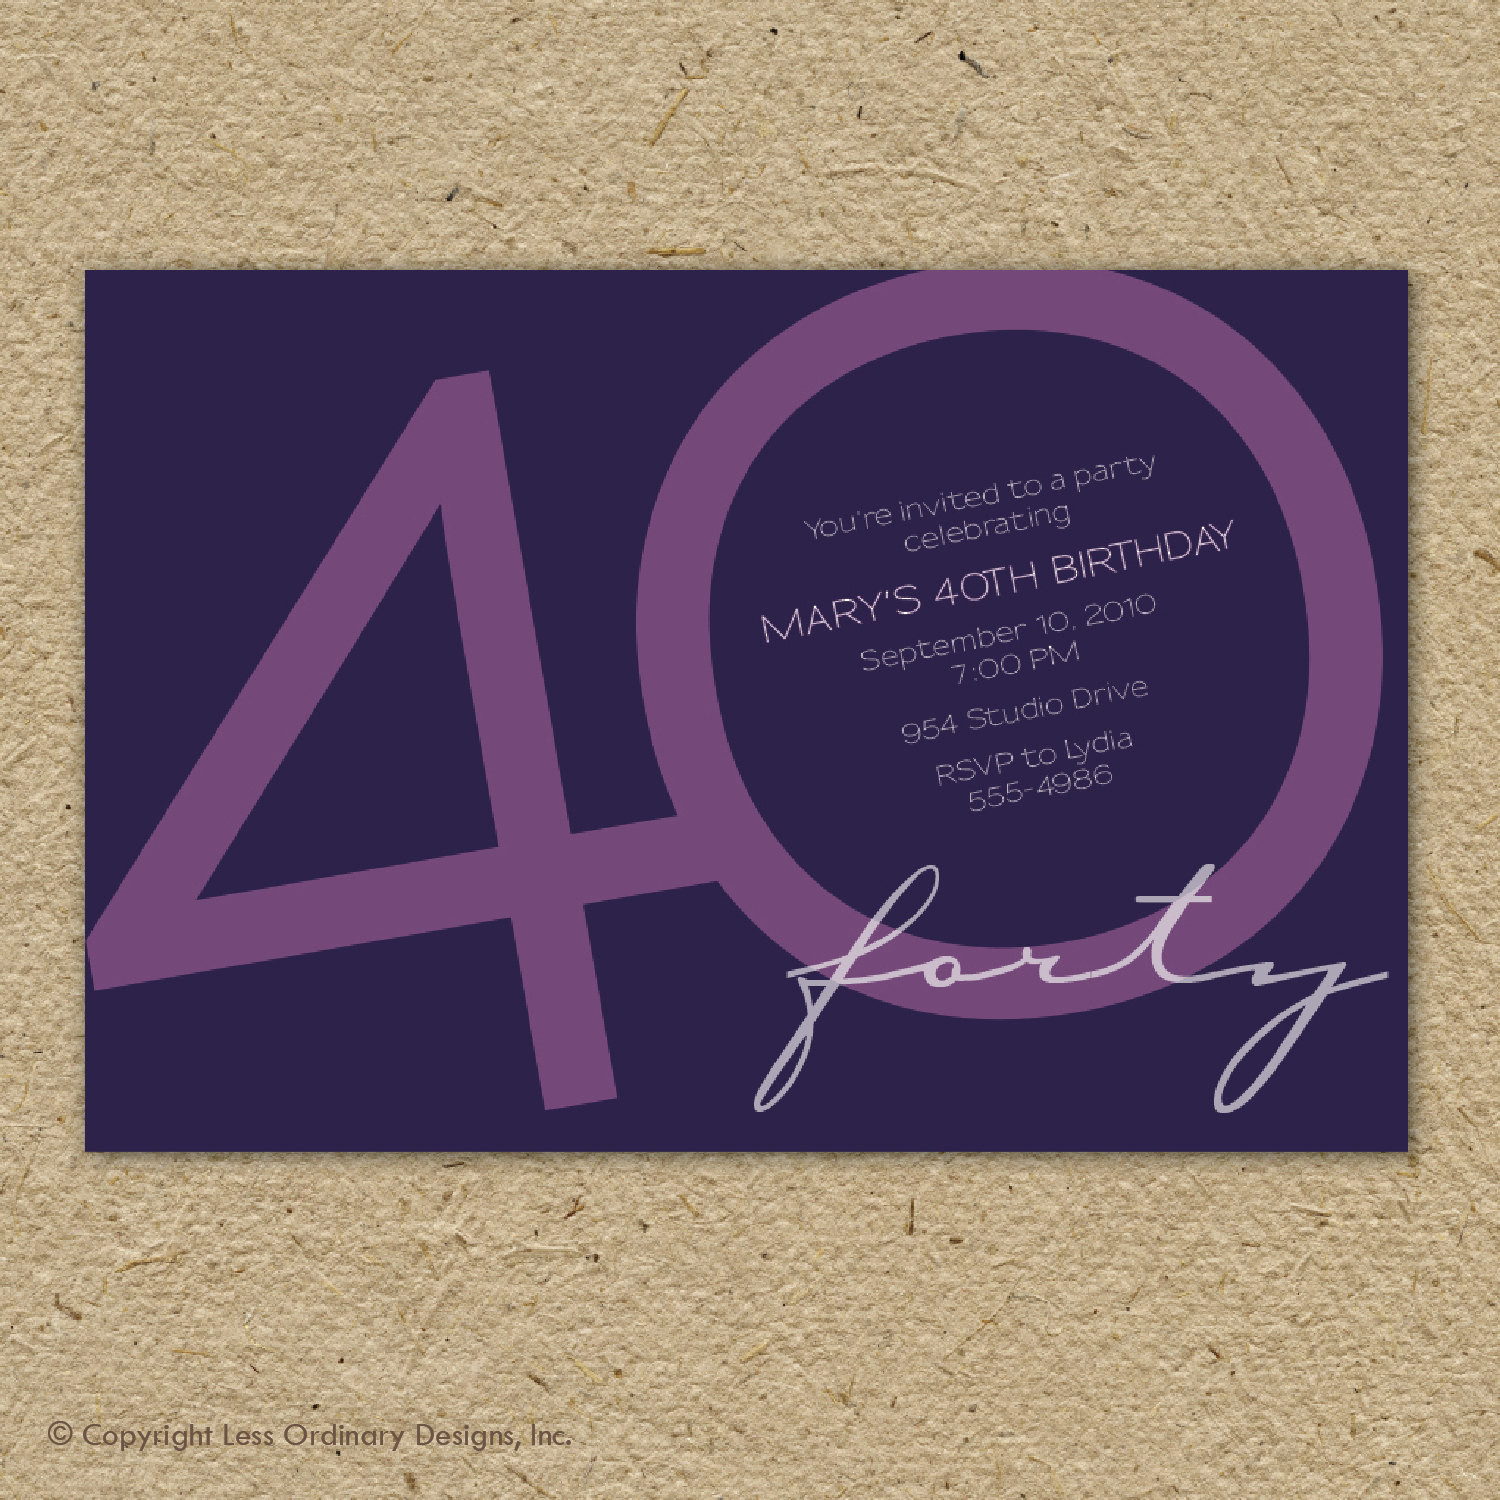 Adult Birthday Party Invitations
 40th birthday party invitation fortieth birthday party